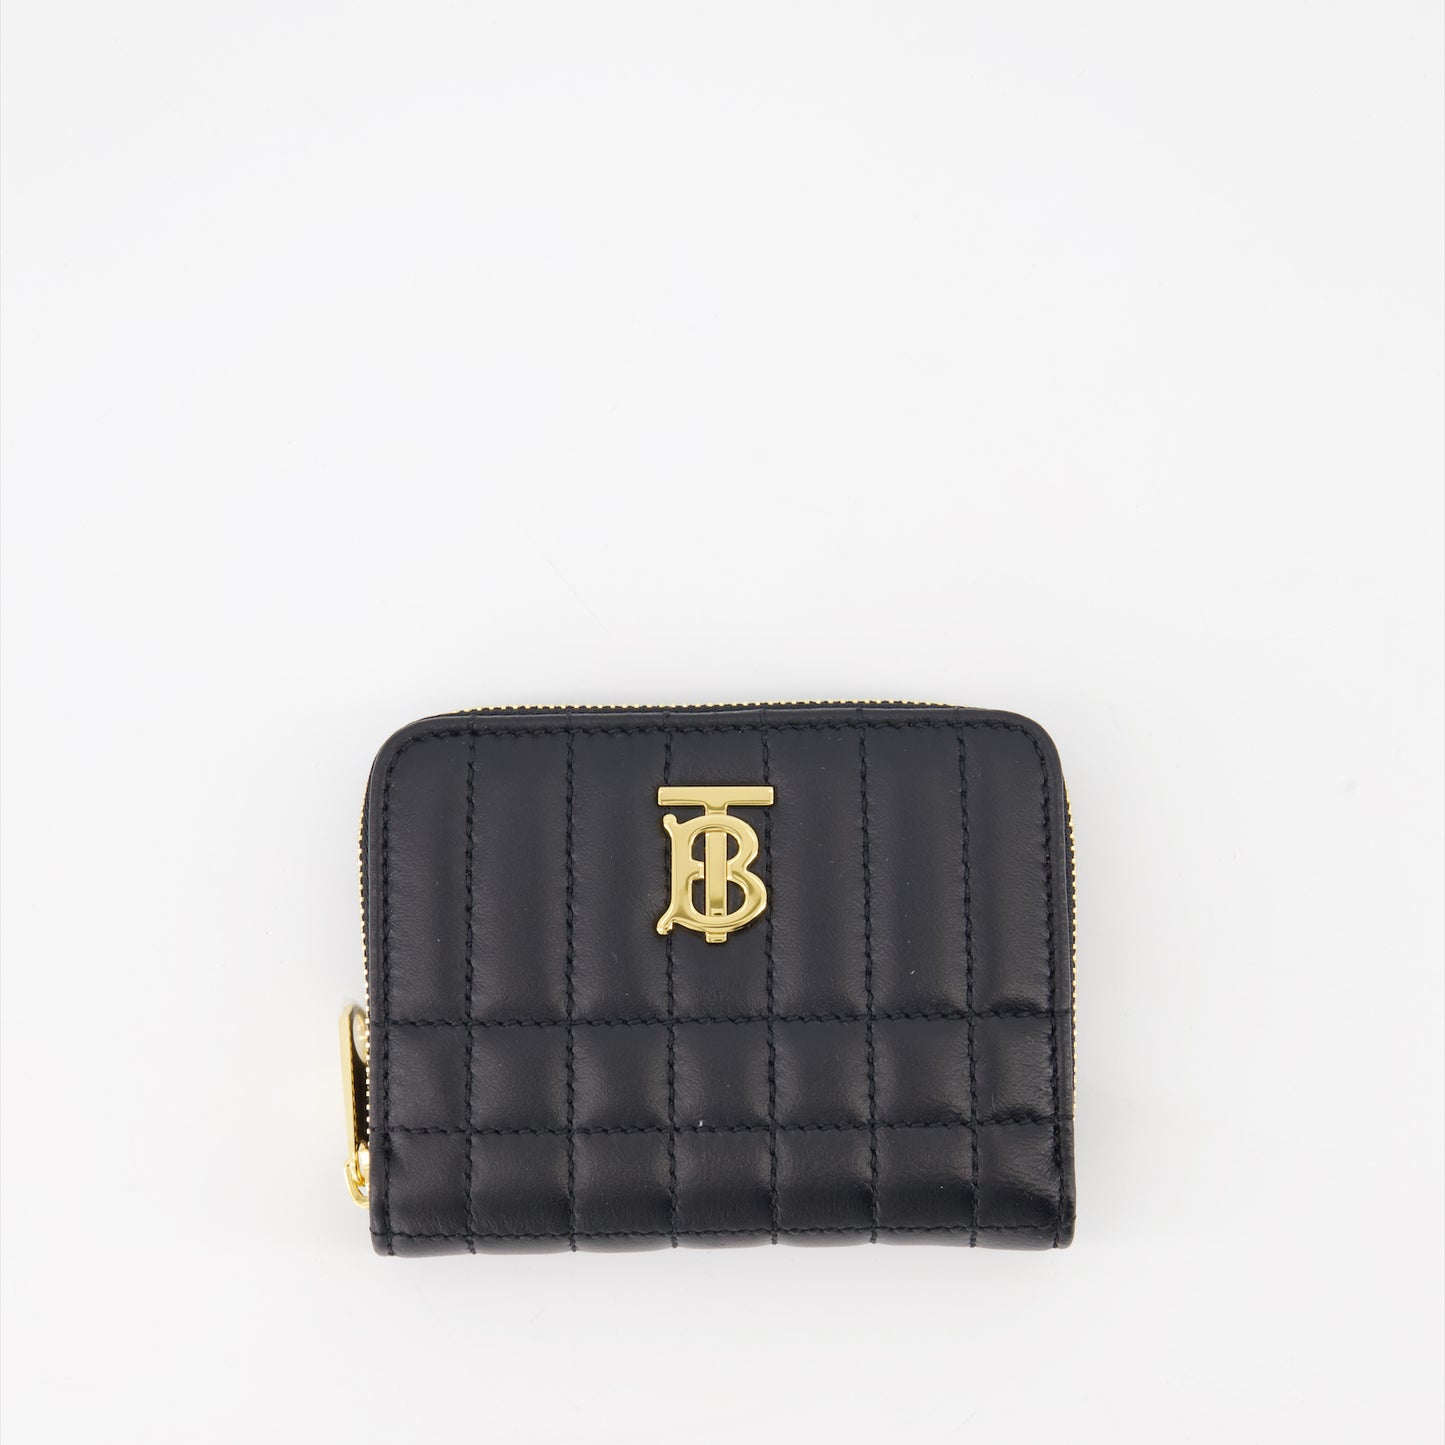 TB wallet